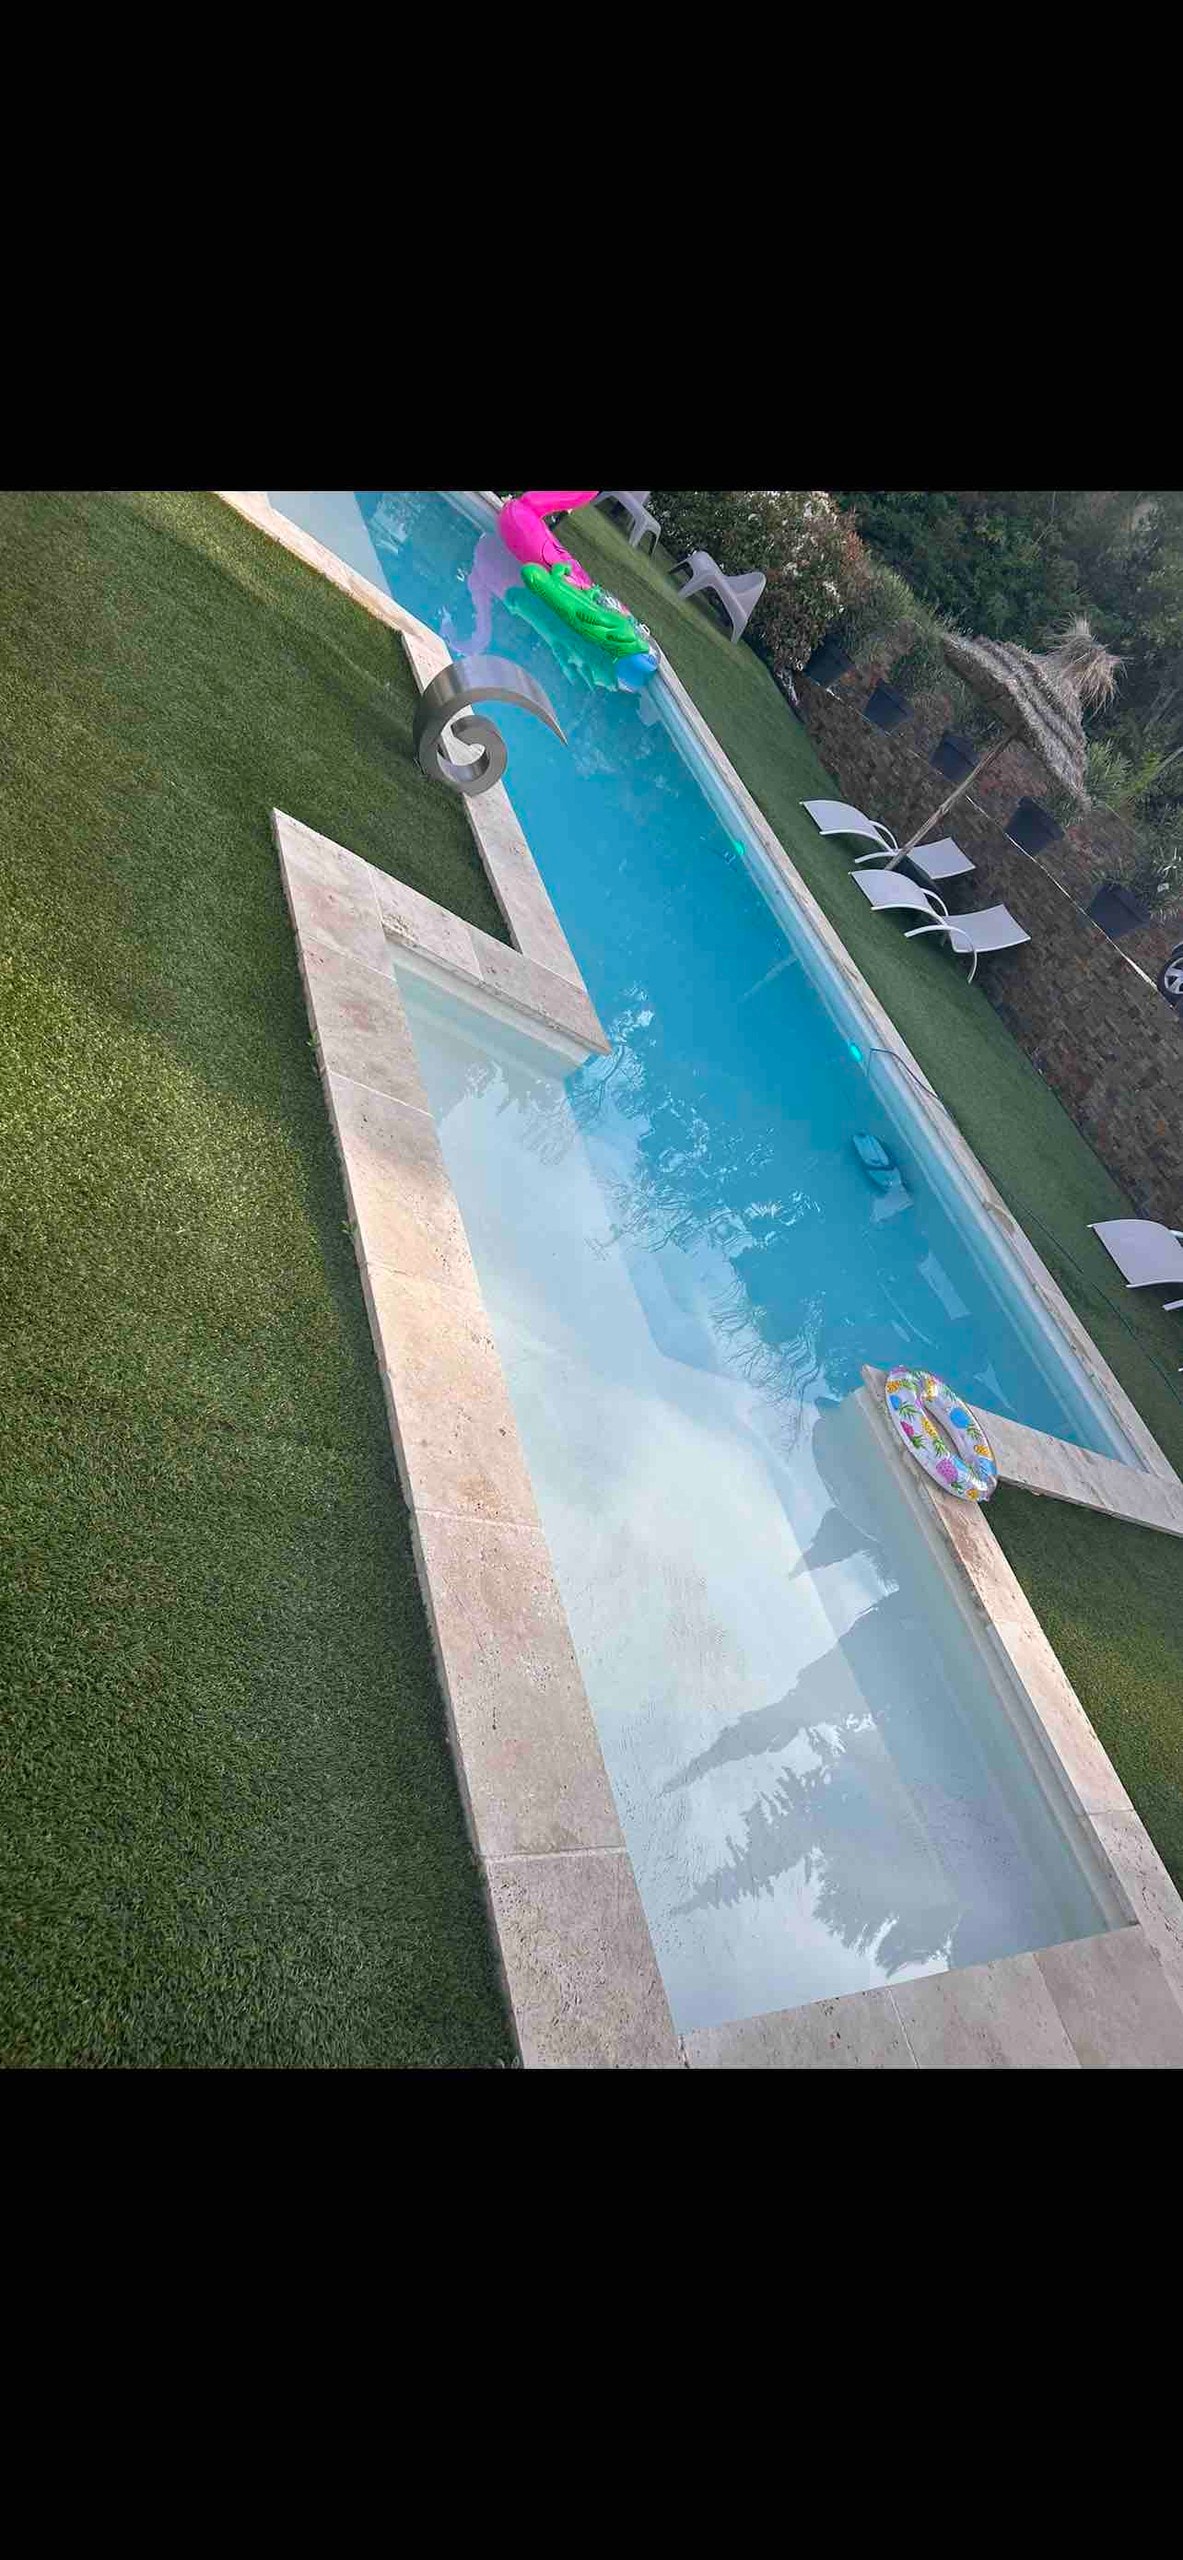 Villa prestations hauts de gamme piscine chauffée